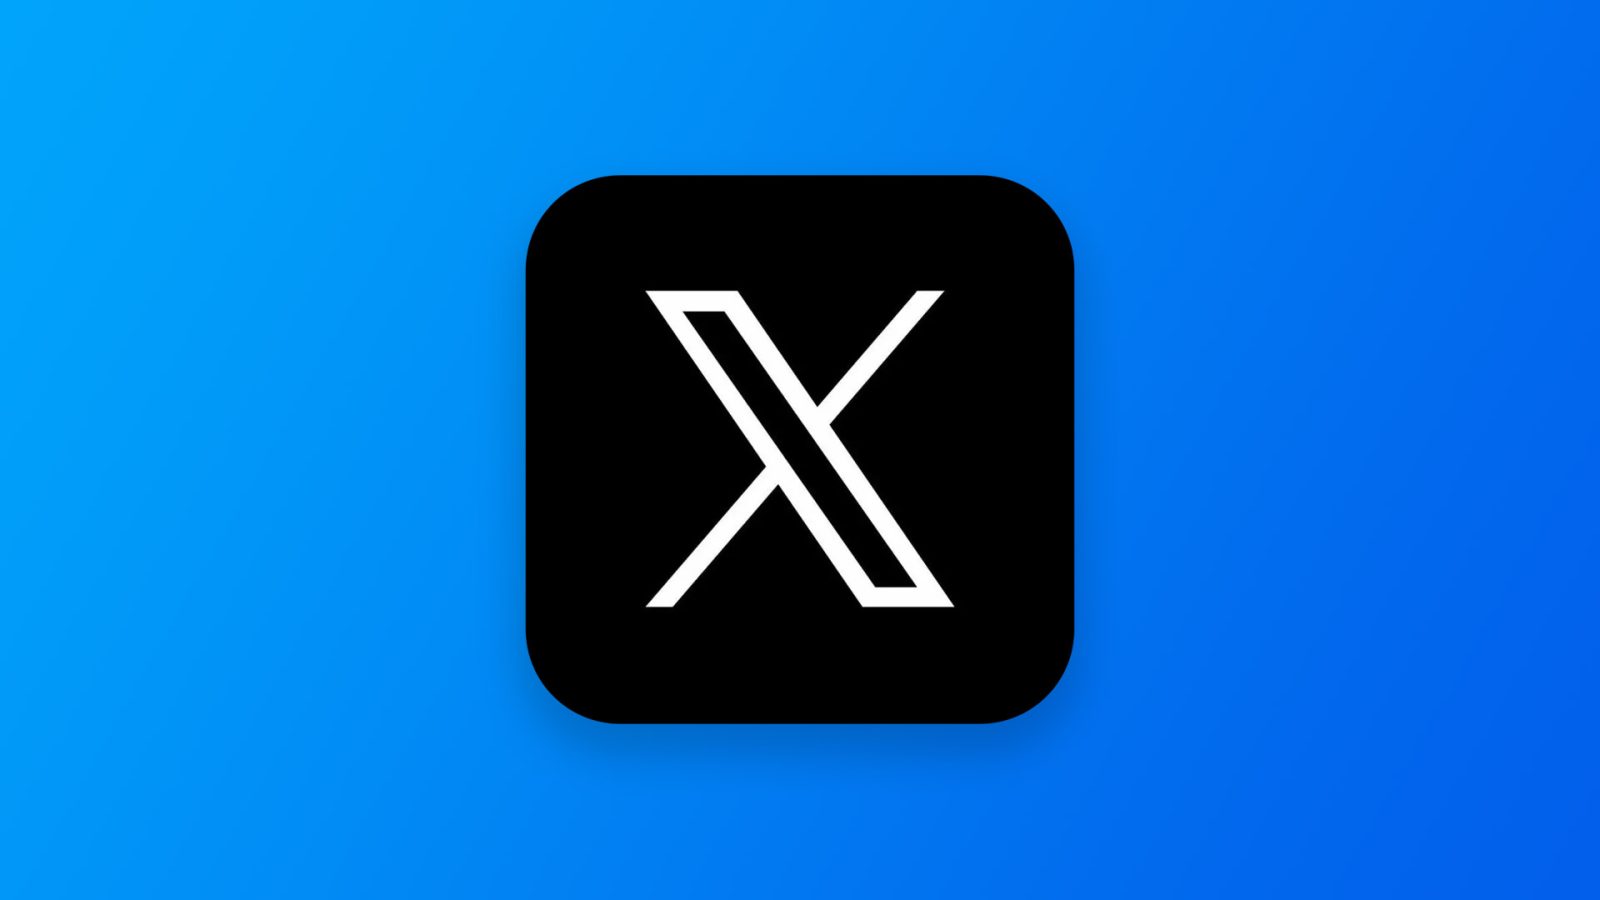 X Twitter logo app icon